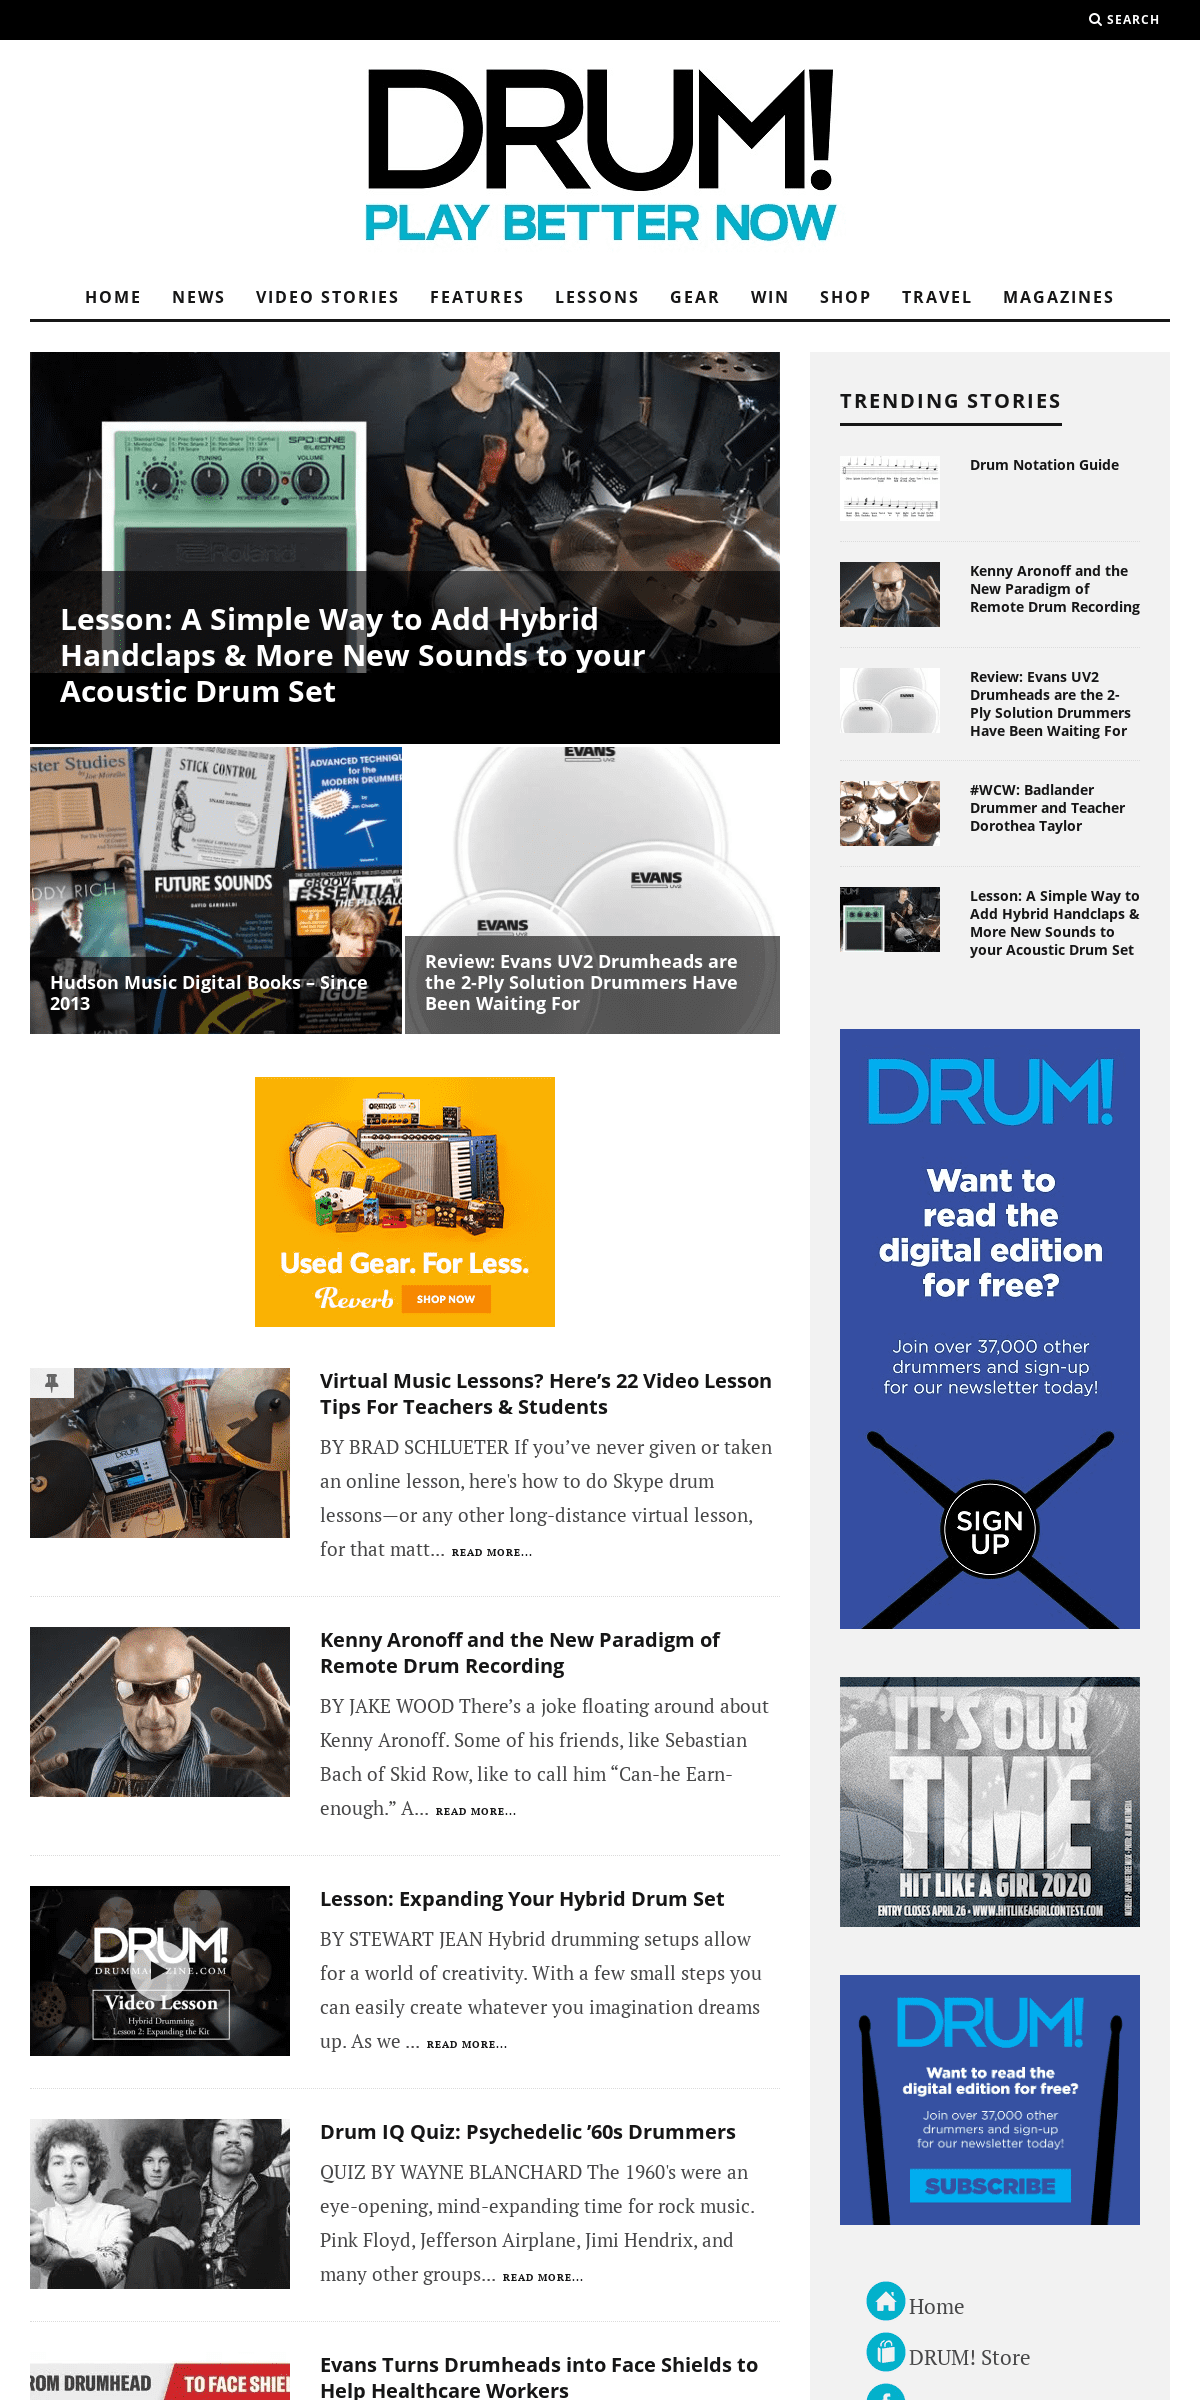 A complete backup of drummagazine.com